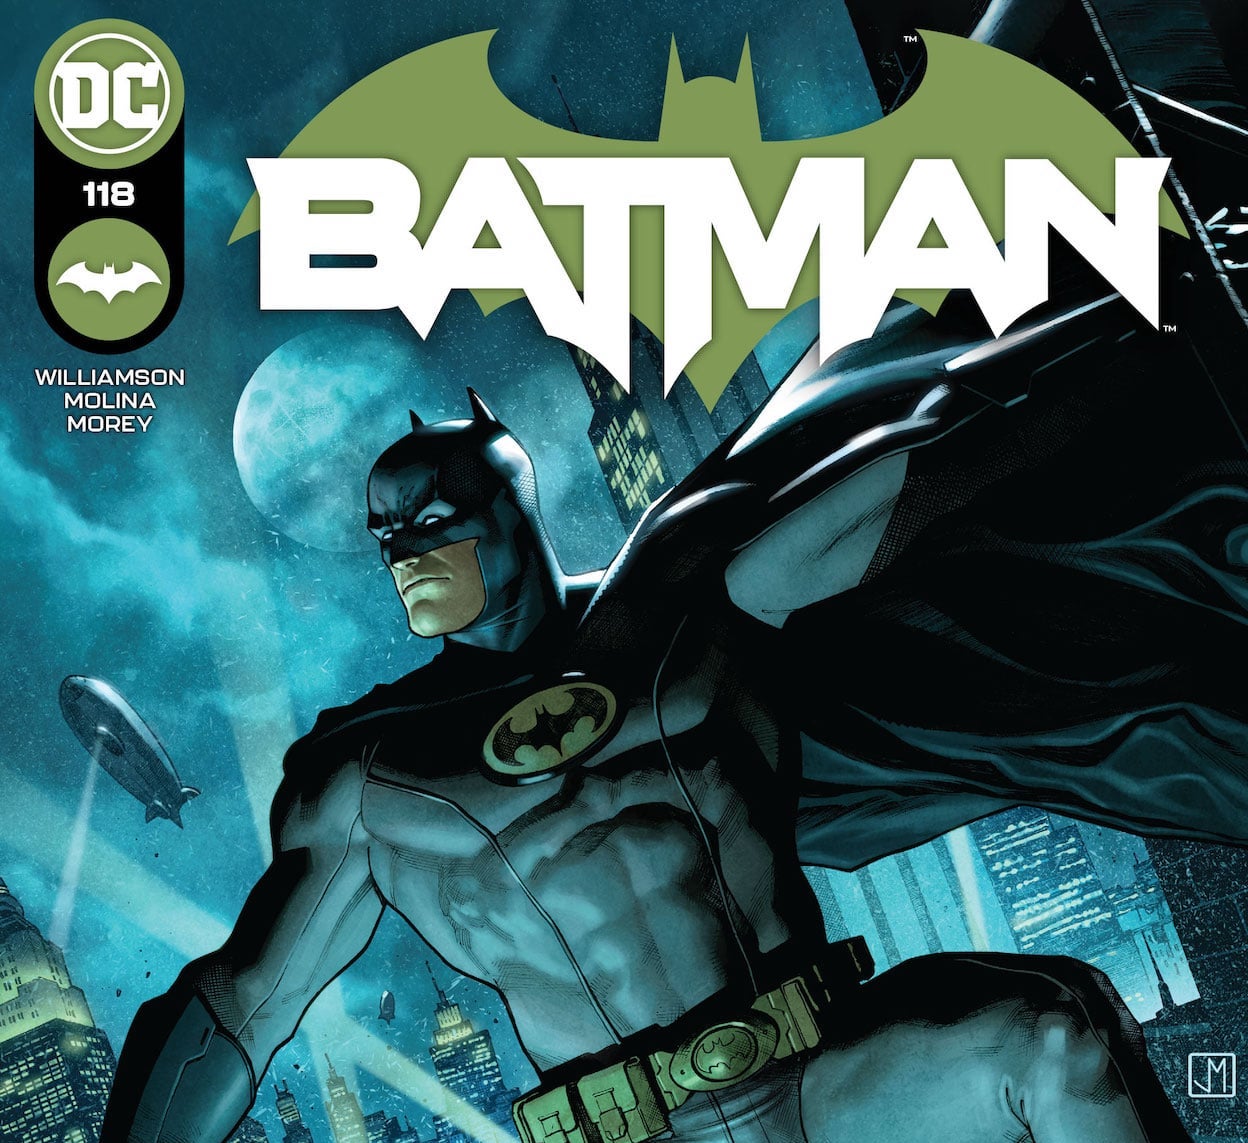 'Batman' #118 brings an exciting return to form